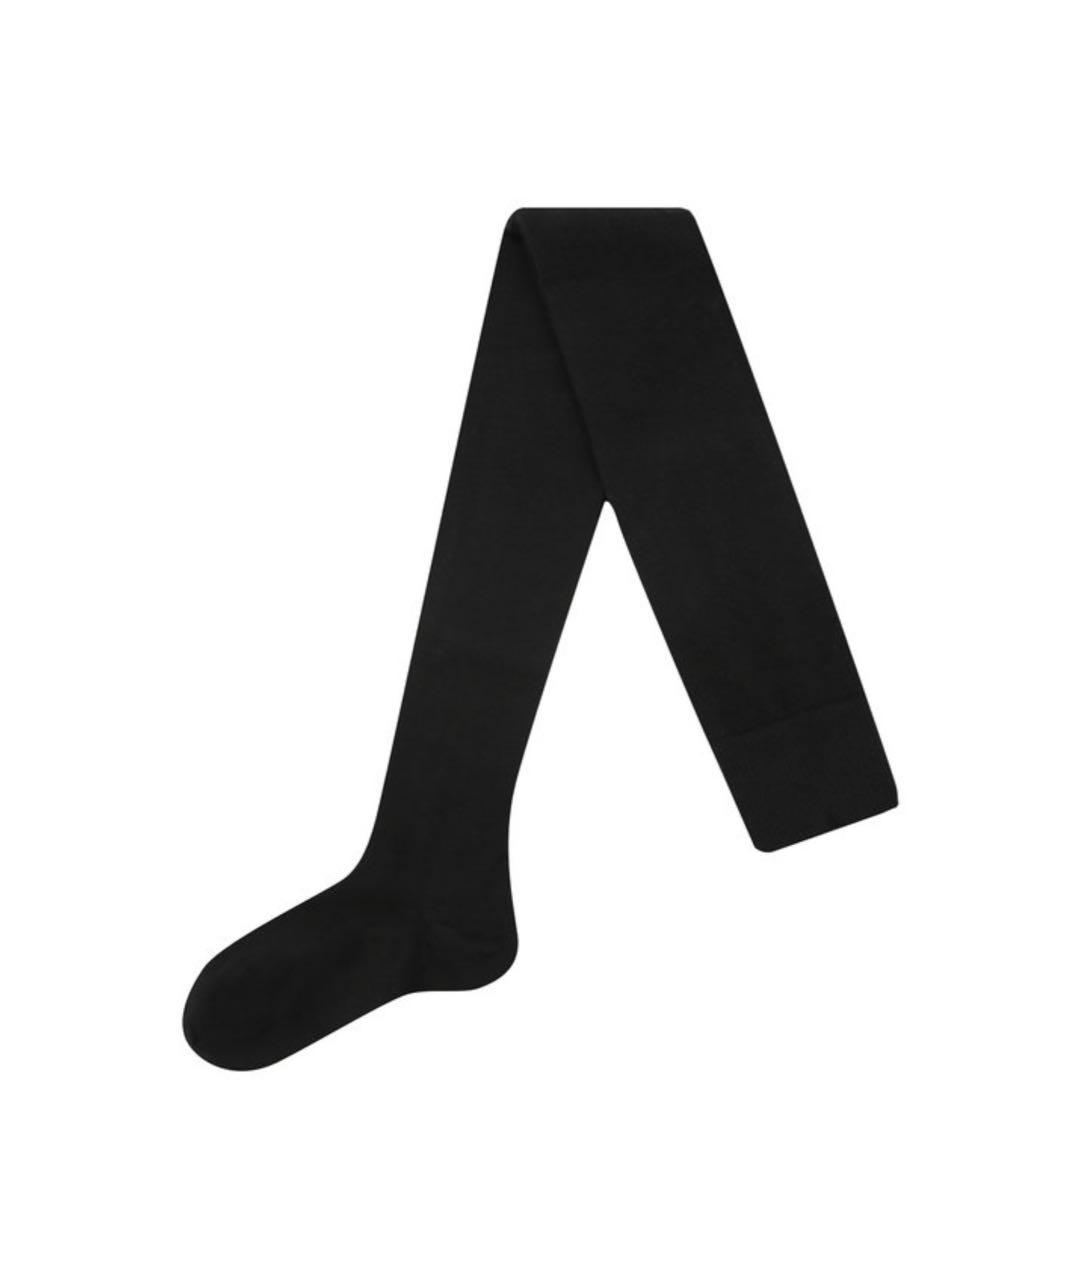 FALKE Черные носки, чулки и колготы, фото 1